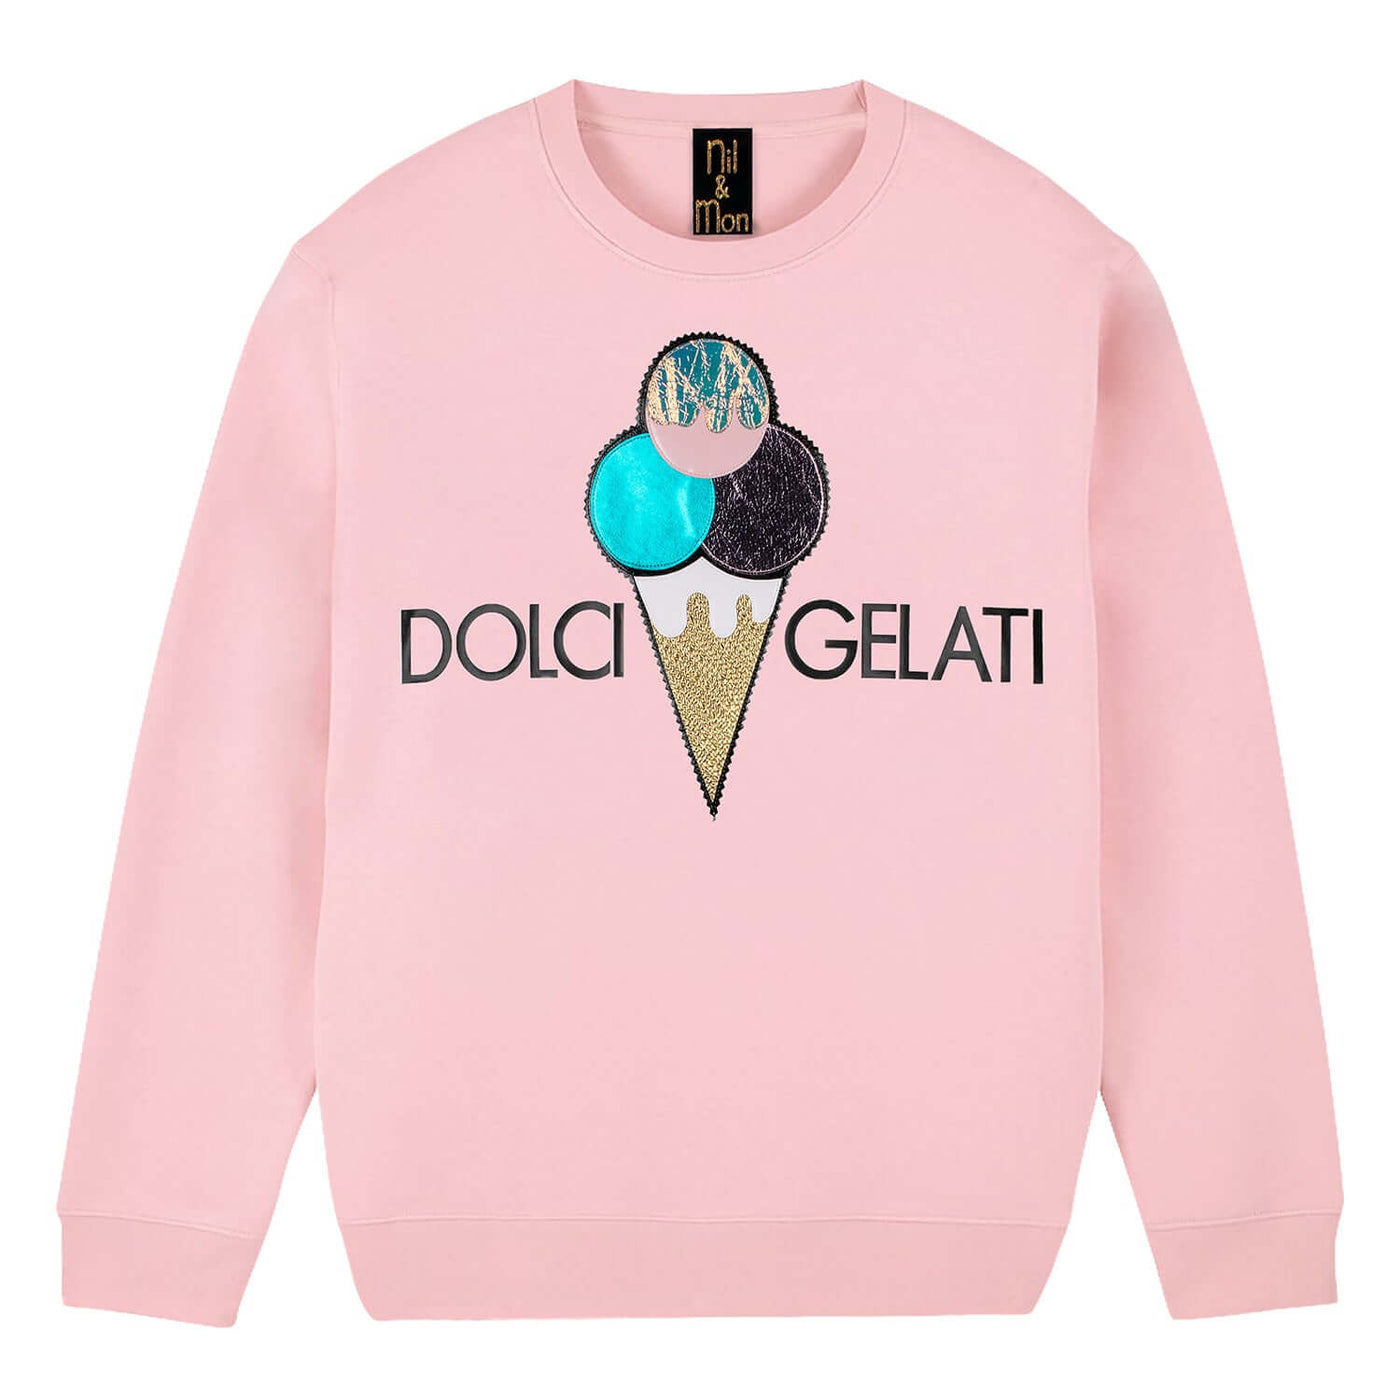 Sweatshirt "Dolci Gelati" - light pink